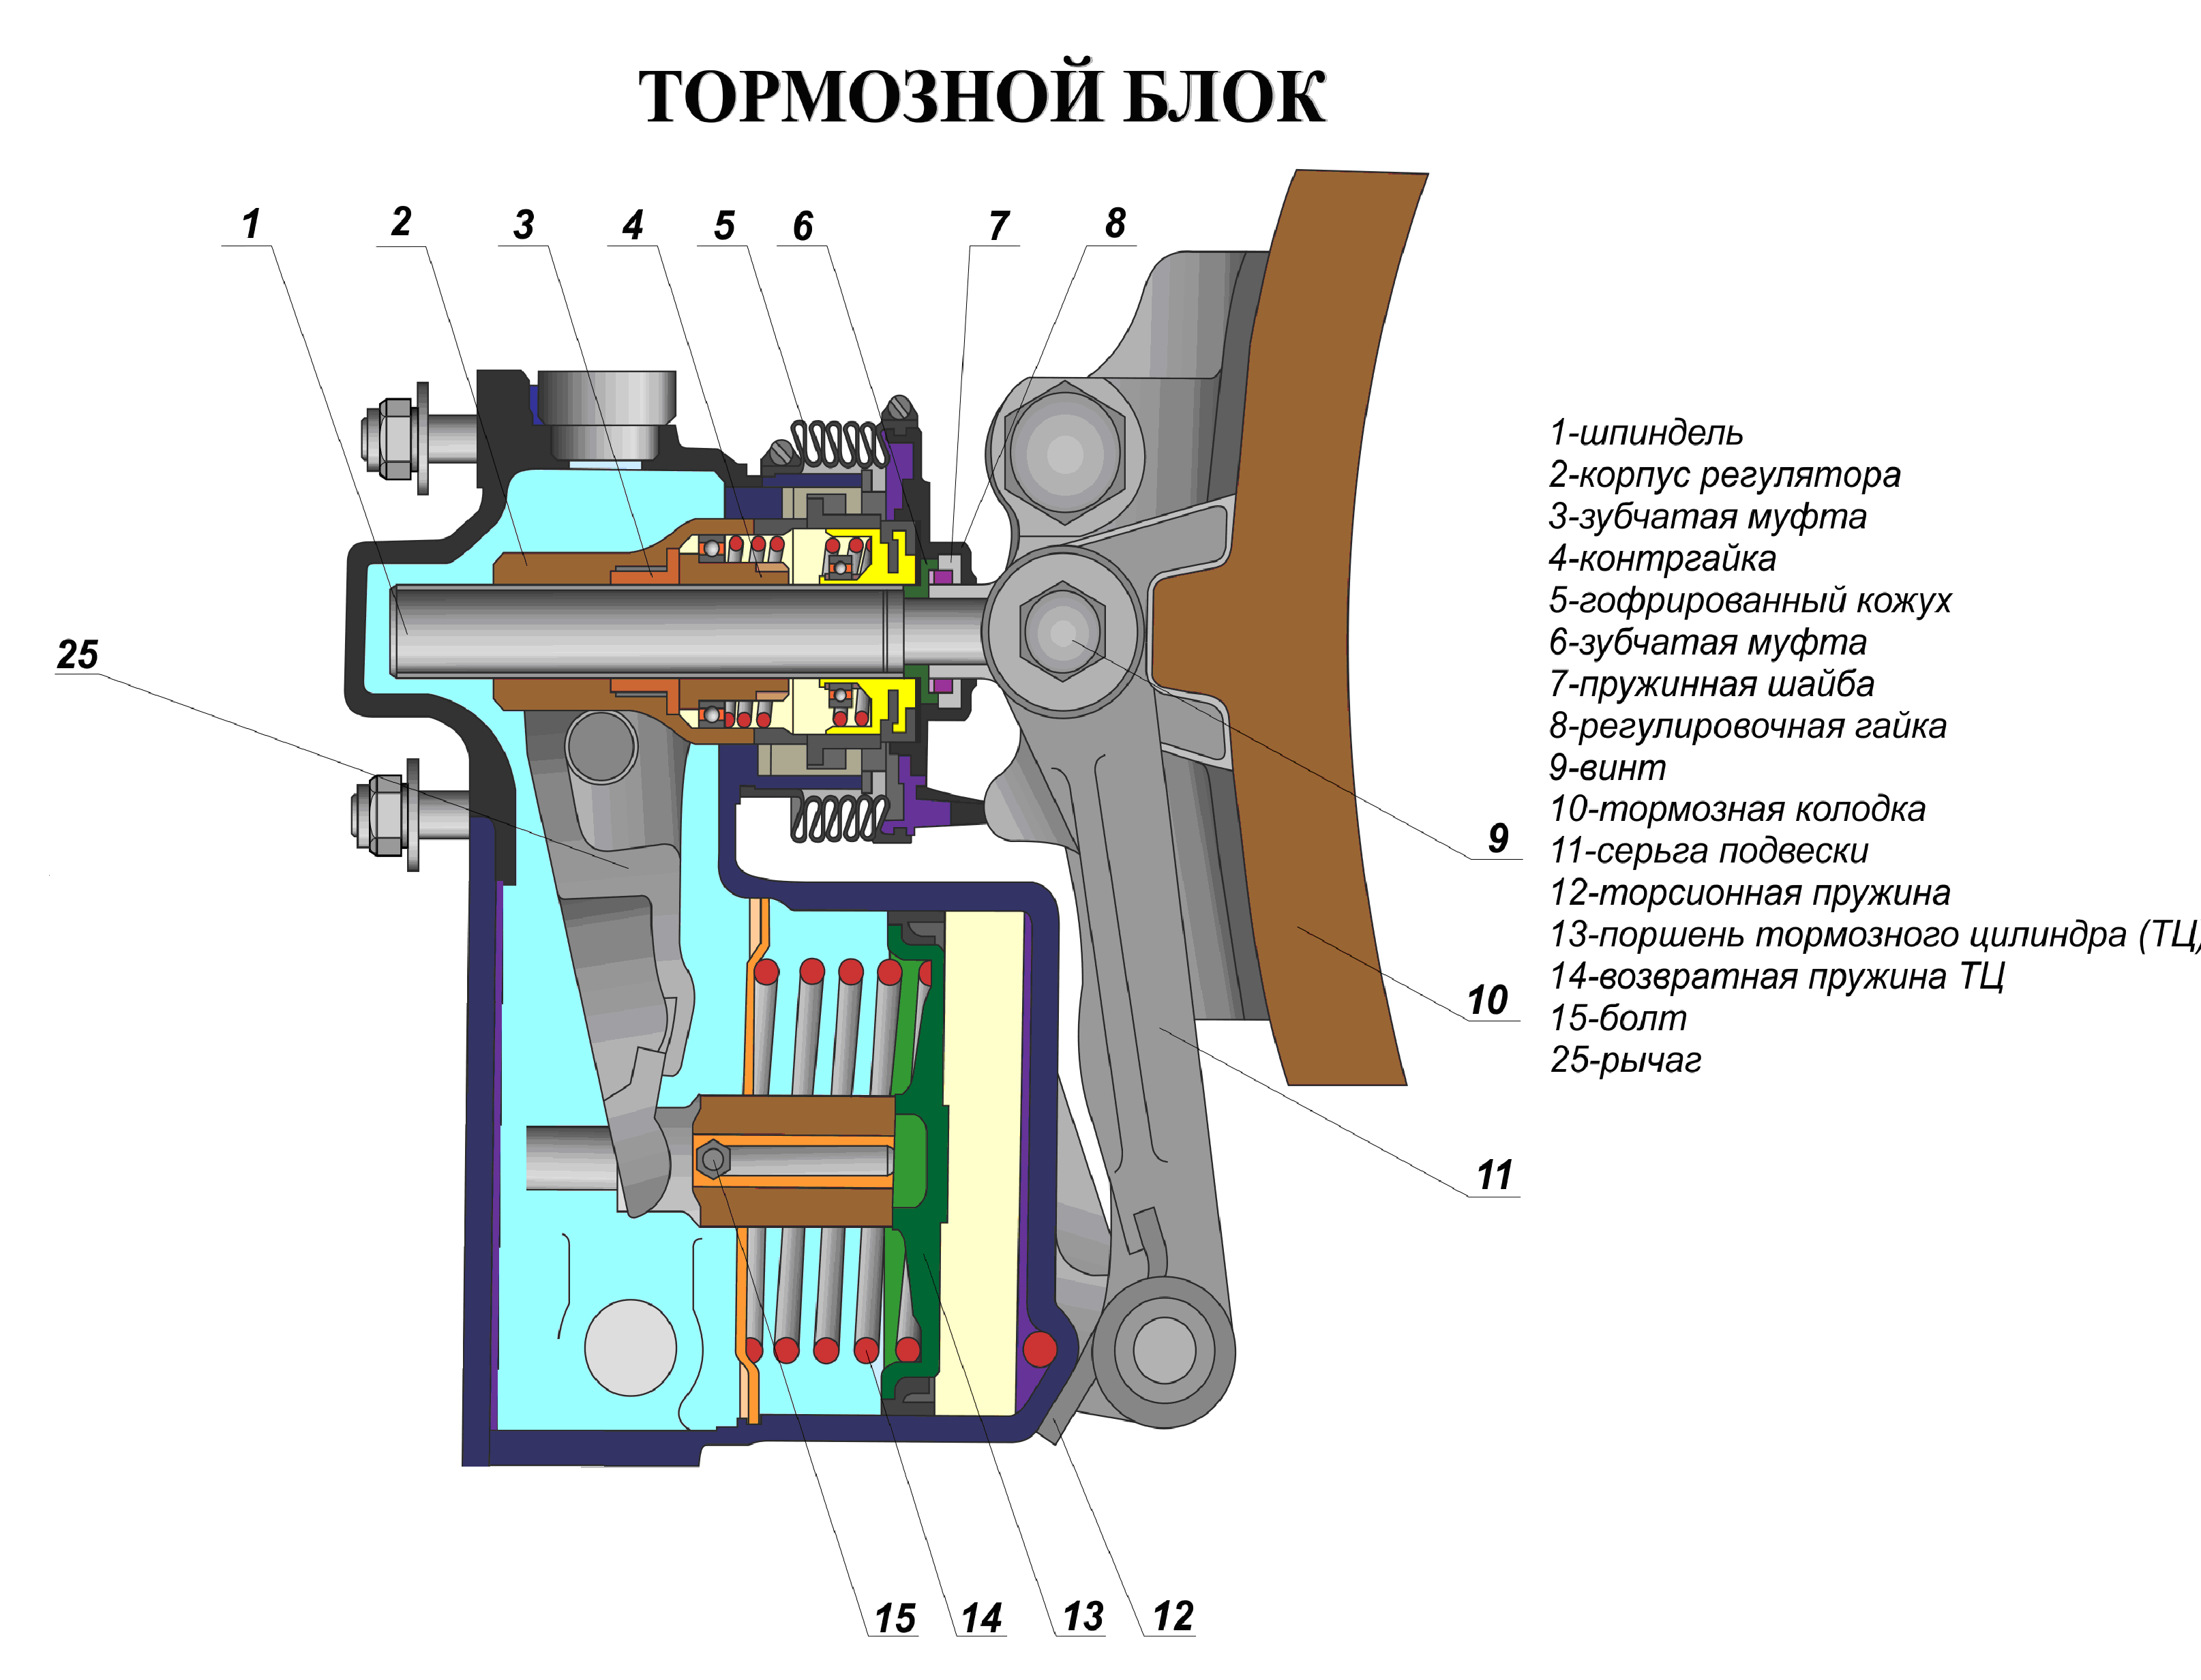 Работа электропневматического тормоза - student2.ru